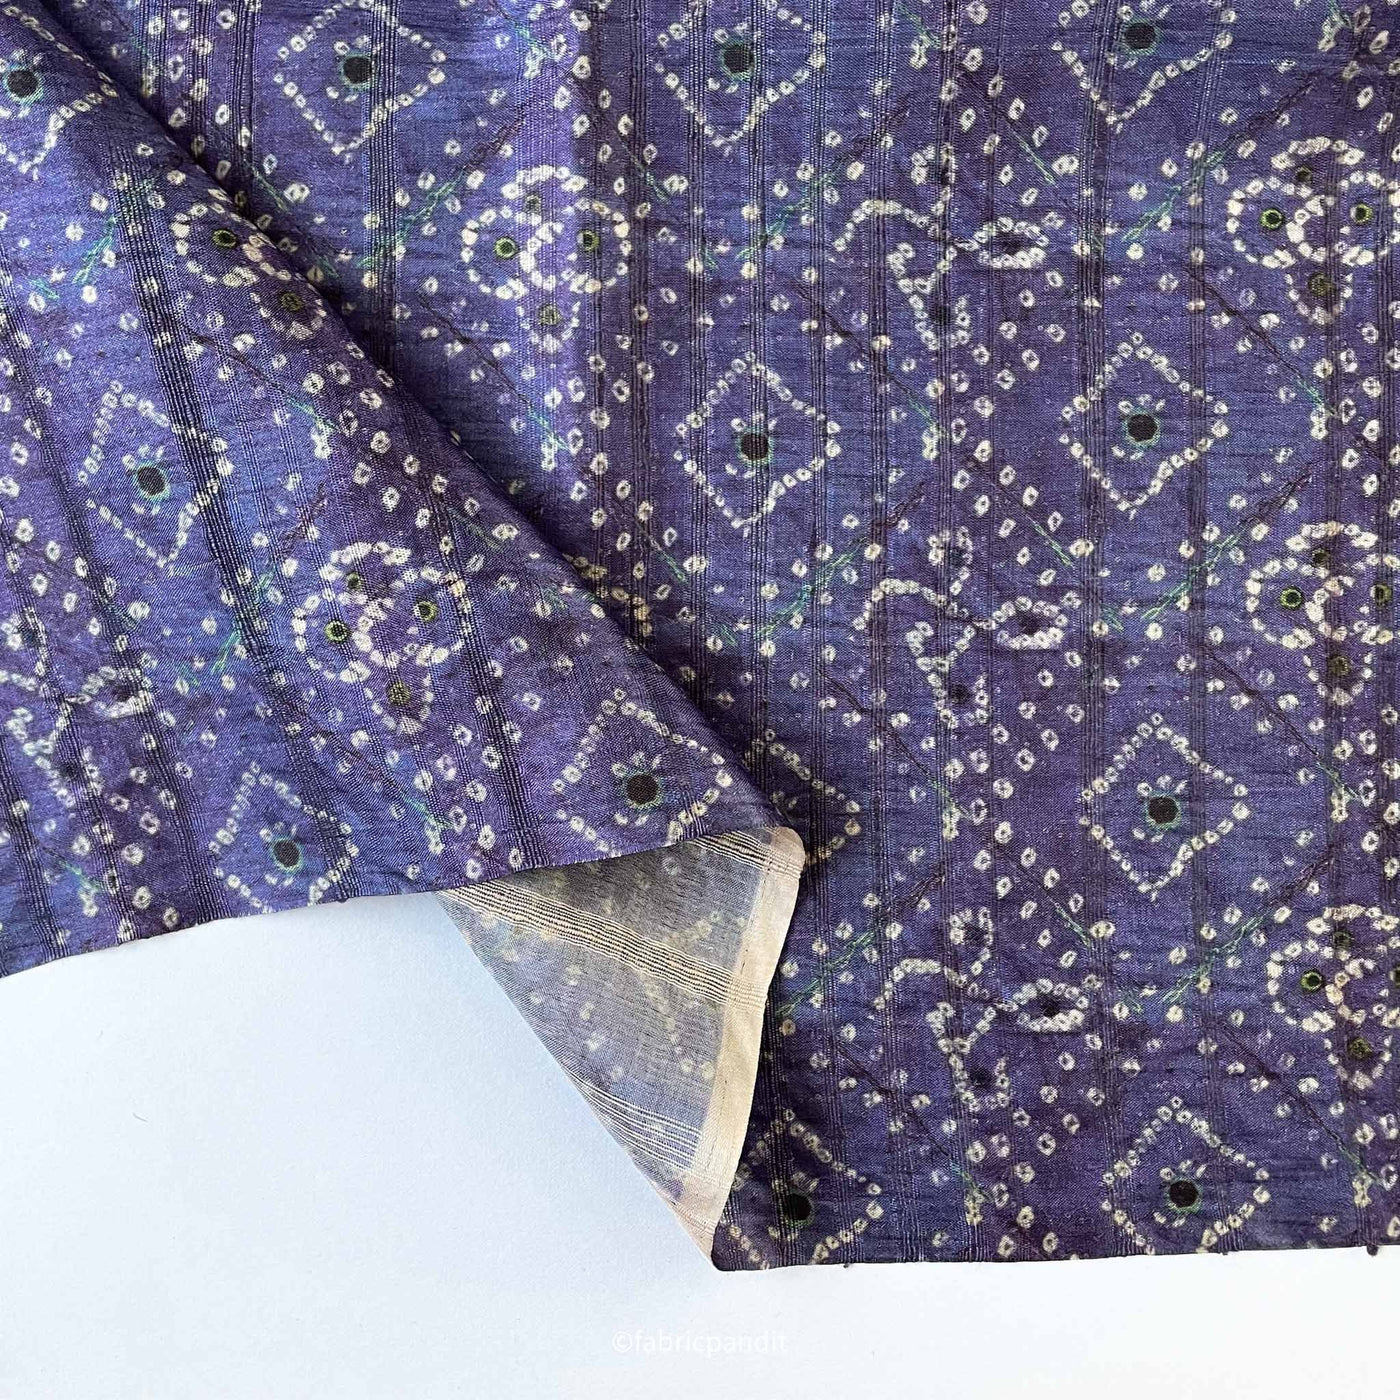 Fabric Pandit Fabric Slate Blue Bandhani Digital Printed Tussar Silk Fabric (Width 44 Inches)